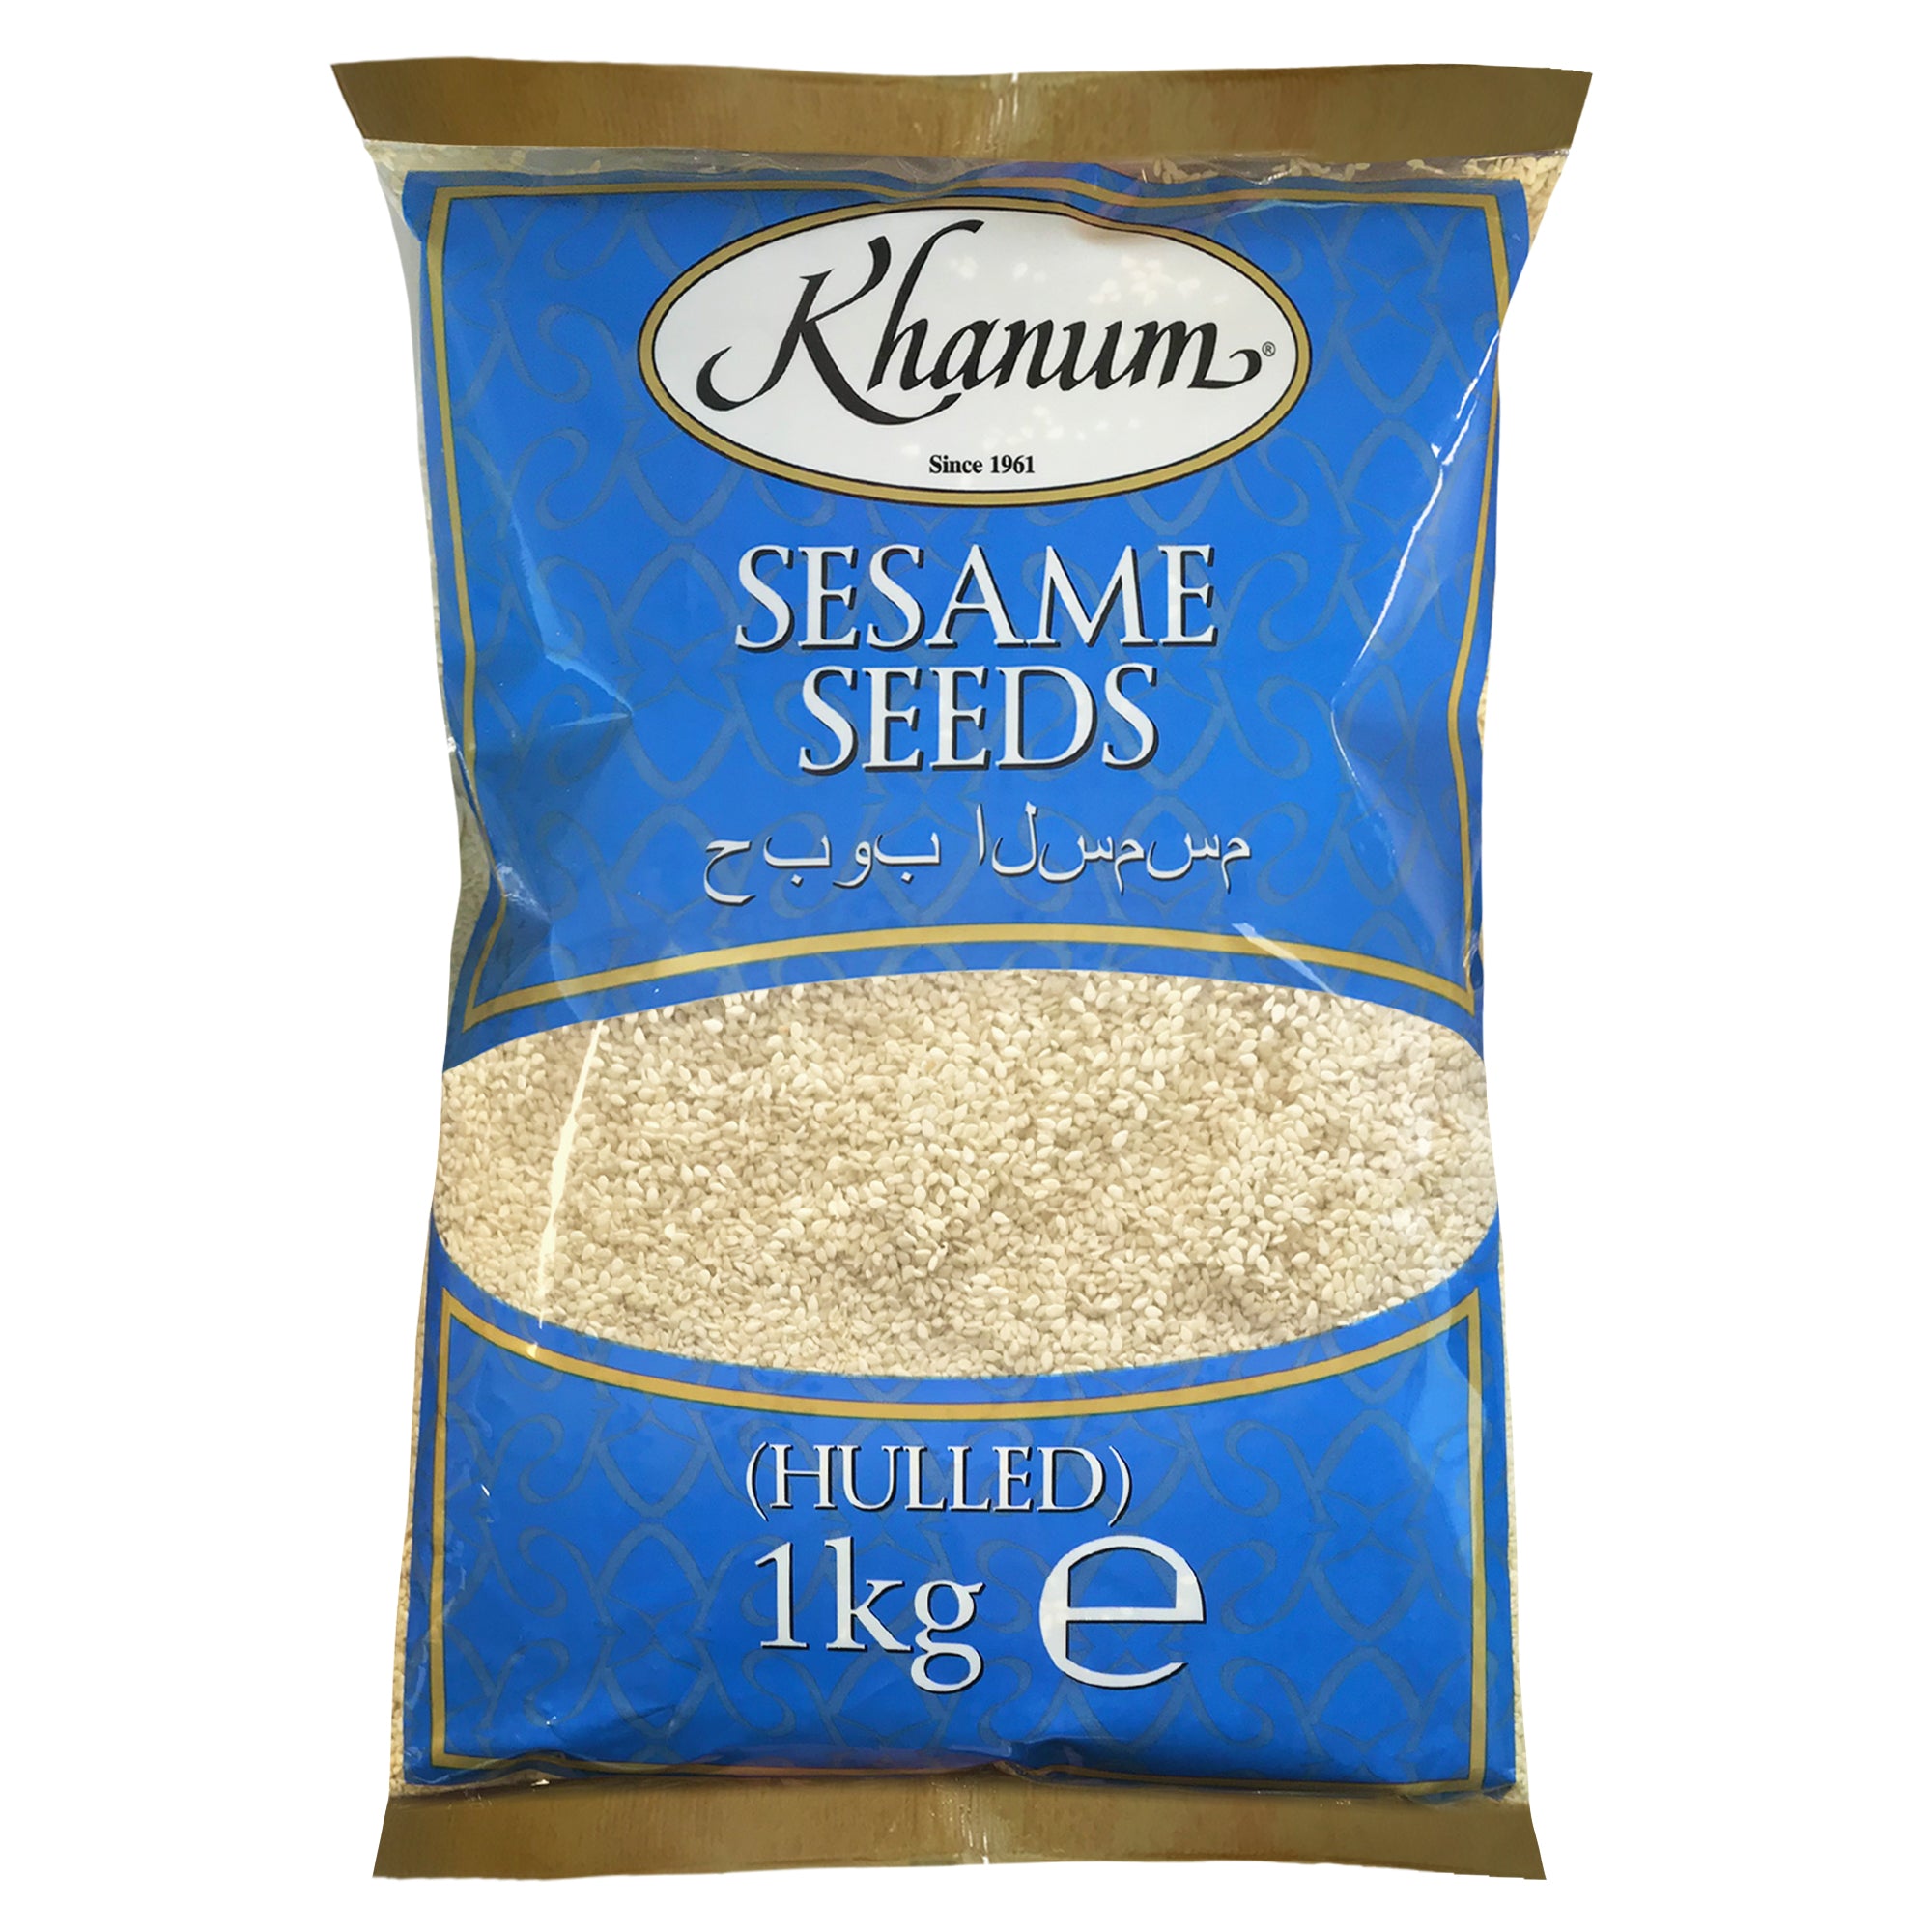 Khanum Sesame Seeds (Hulled) 6x1kg